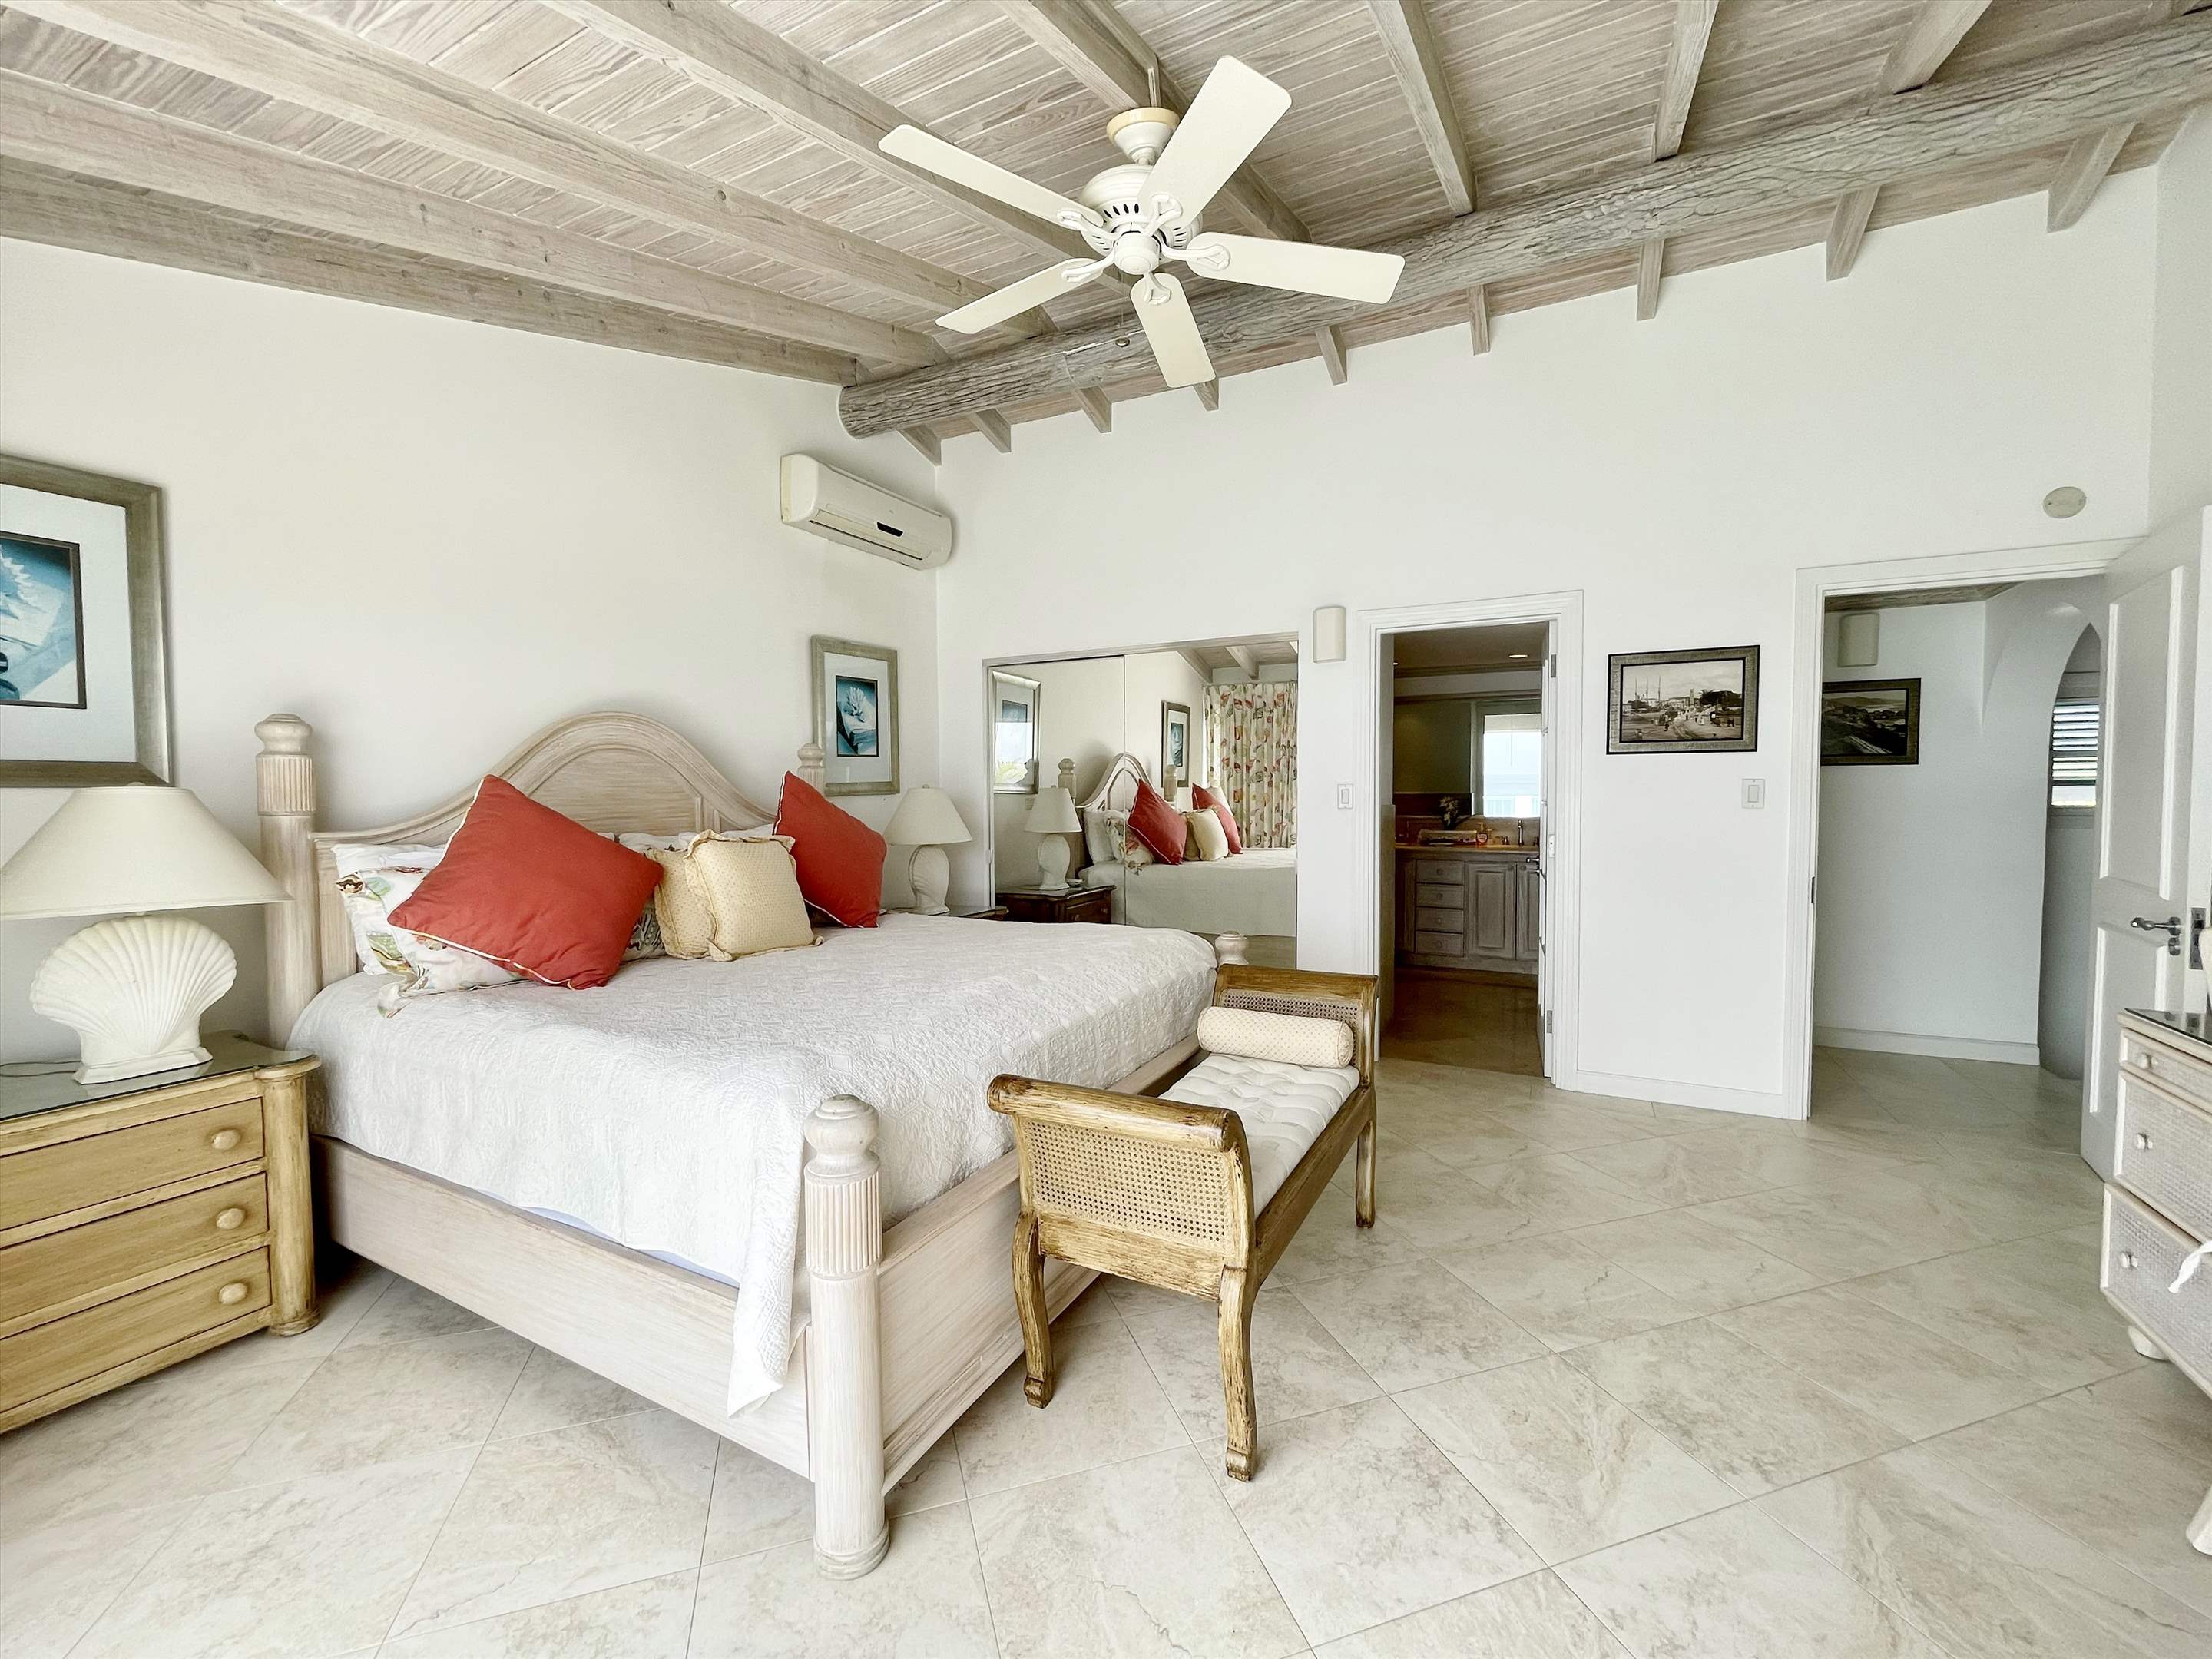 Villas on the Beach 403, 2 bedroom, 2 bedroom apartment in St. James & West Coast, Barbados Photo #19